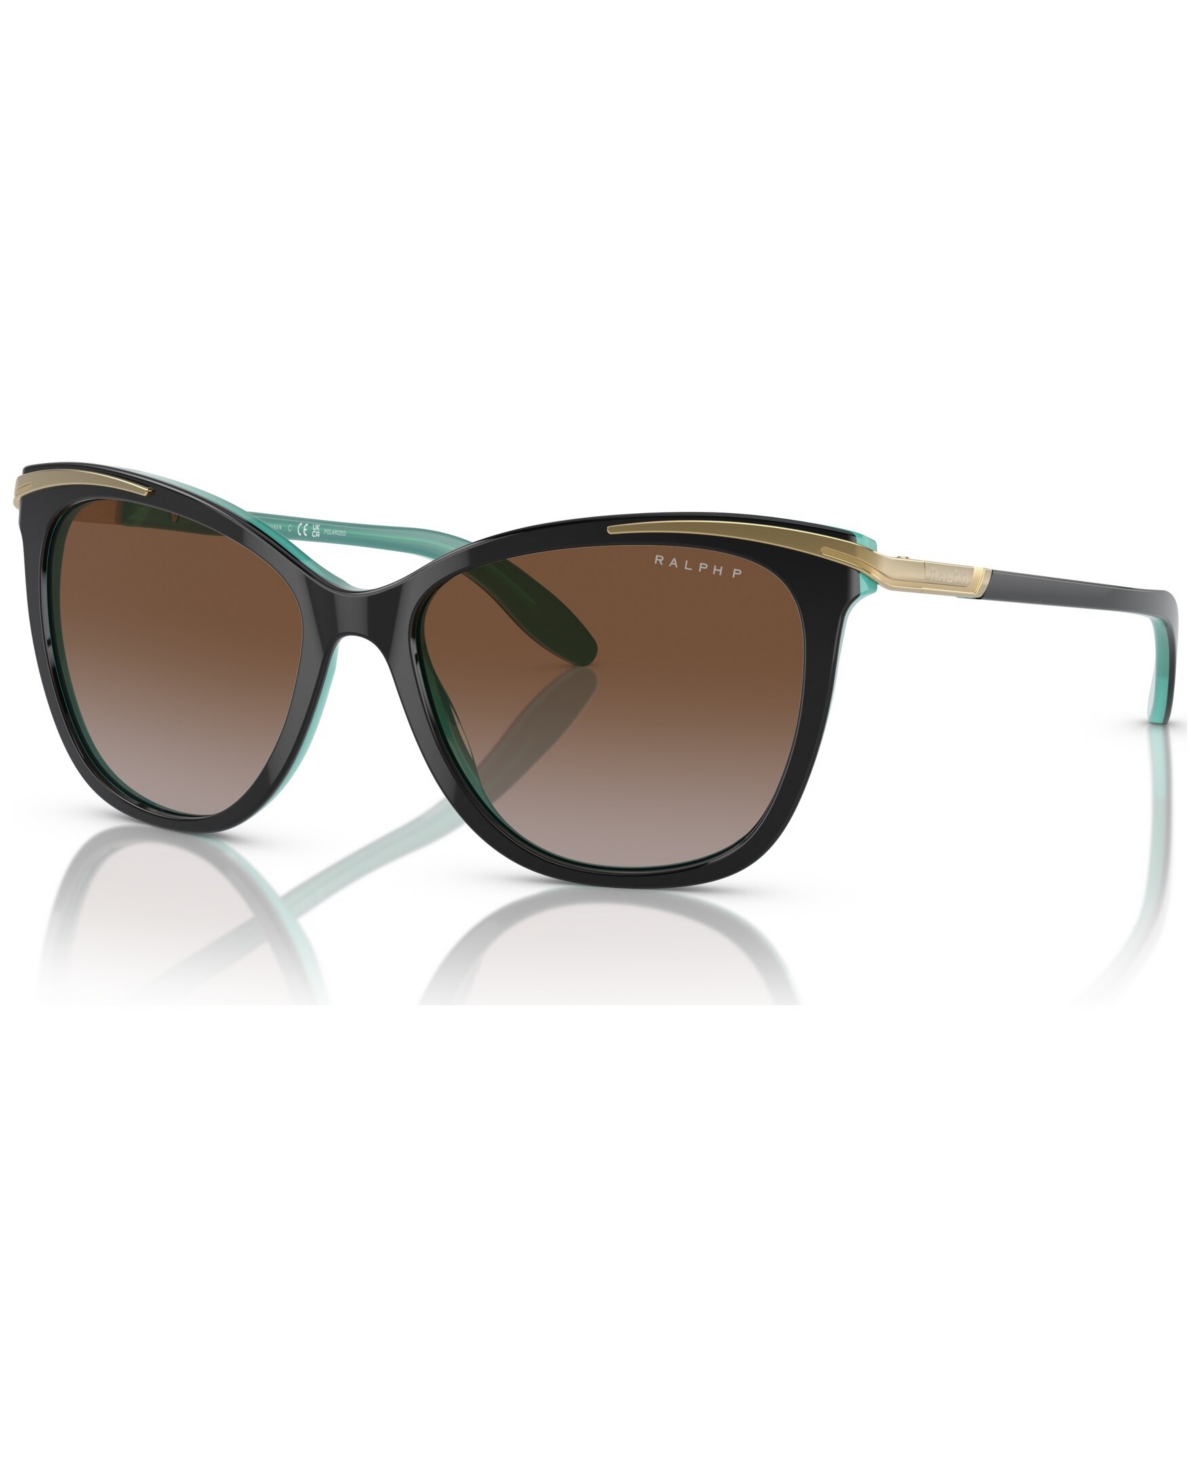 Women's Polarized Sunglasses, RA5203 - Black on Aquamarine